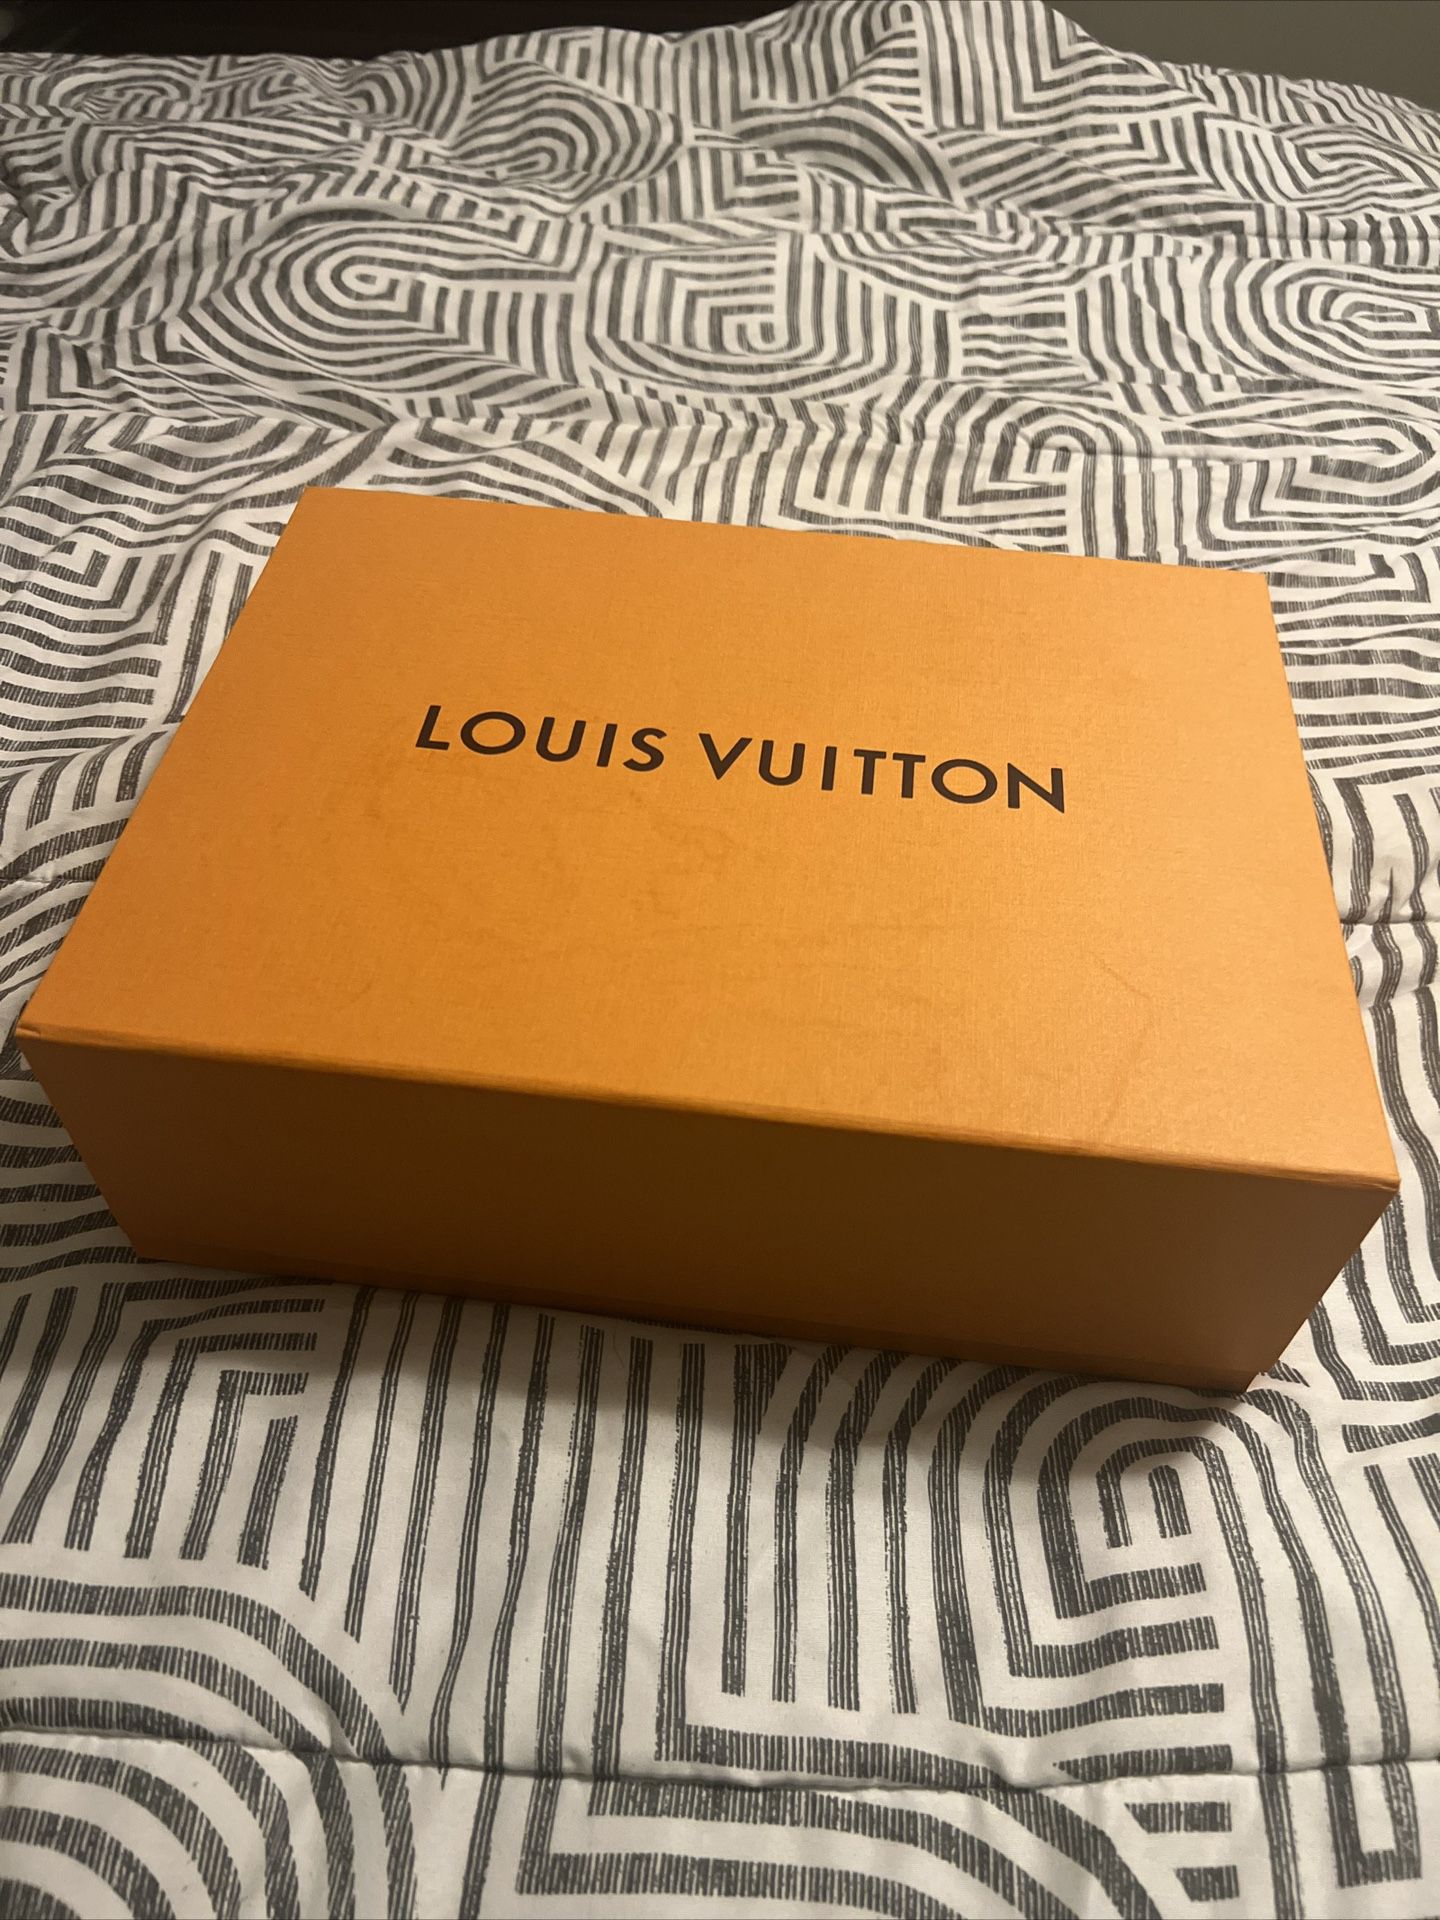 Louis Vuitton bucket hat (leather) for Sale in Philadelphia, PA - OfferUp